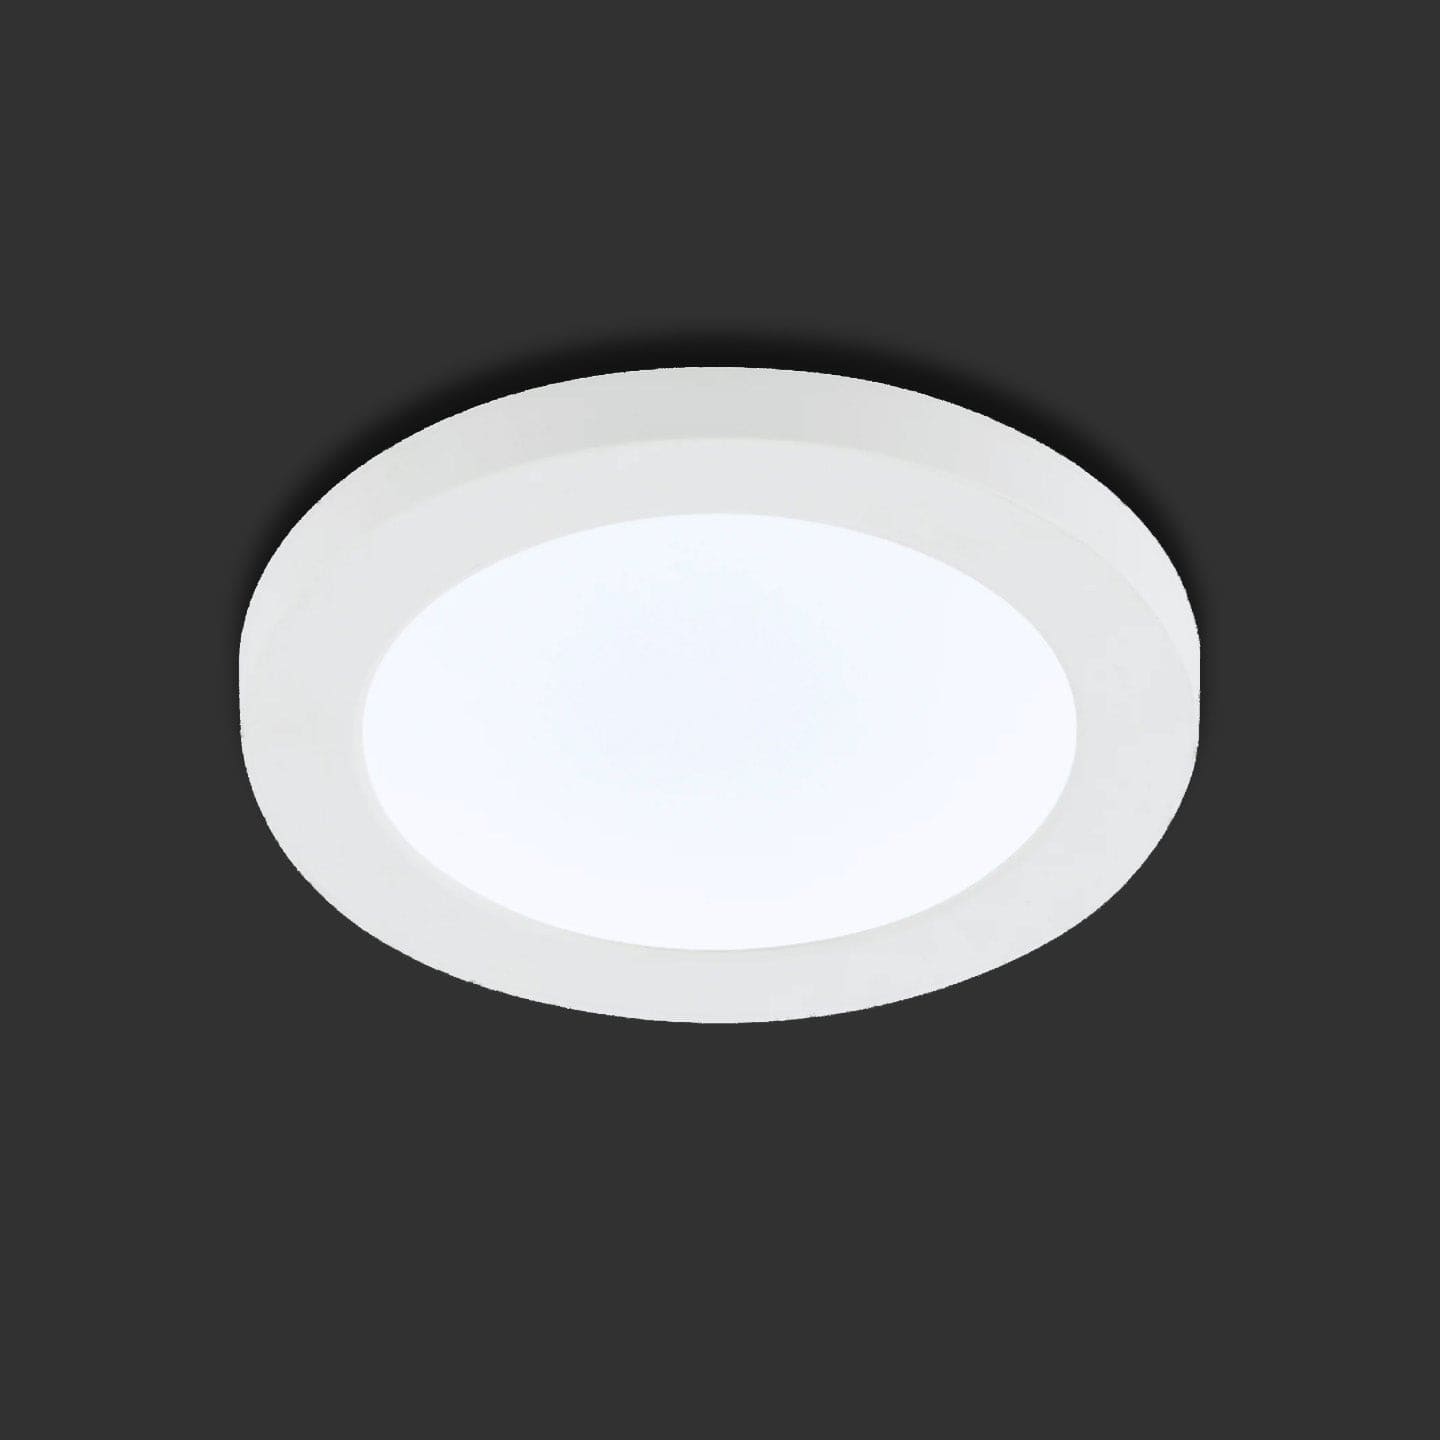 Lights  -  Forum Spa White Tauri 12W Led Flush Bathroom Light  -  50155599